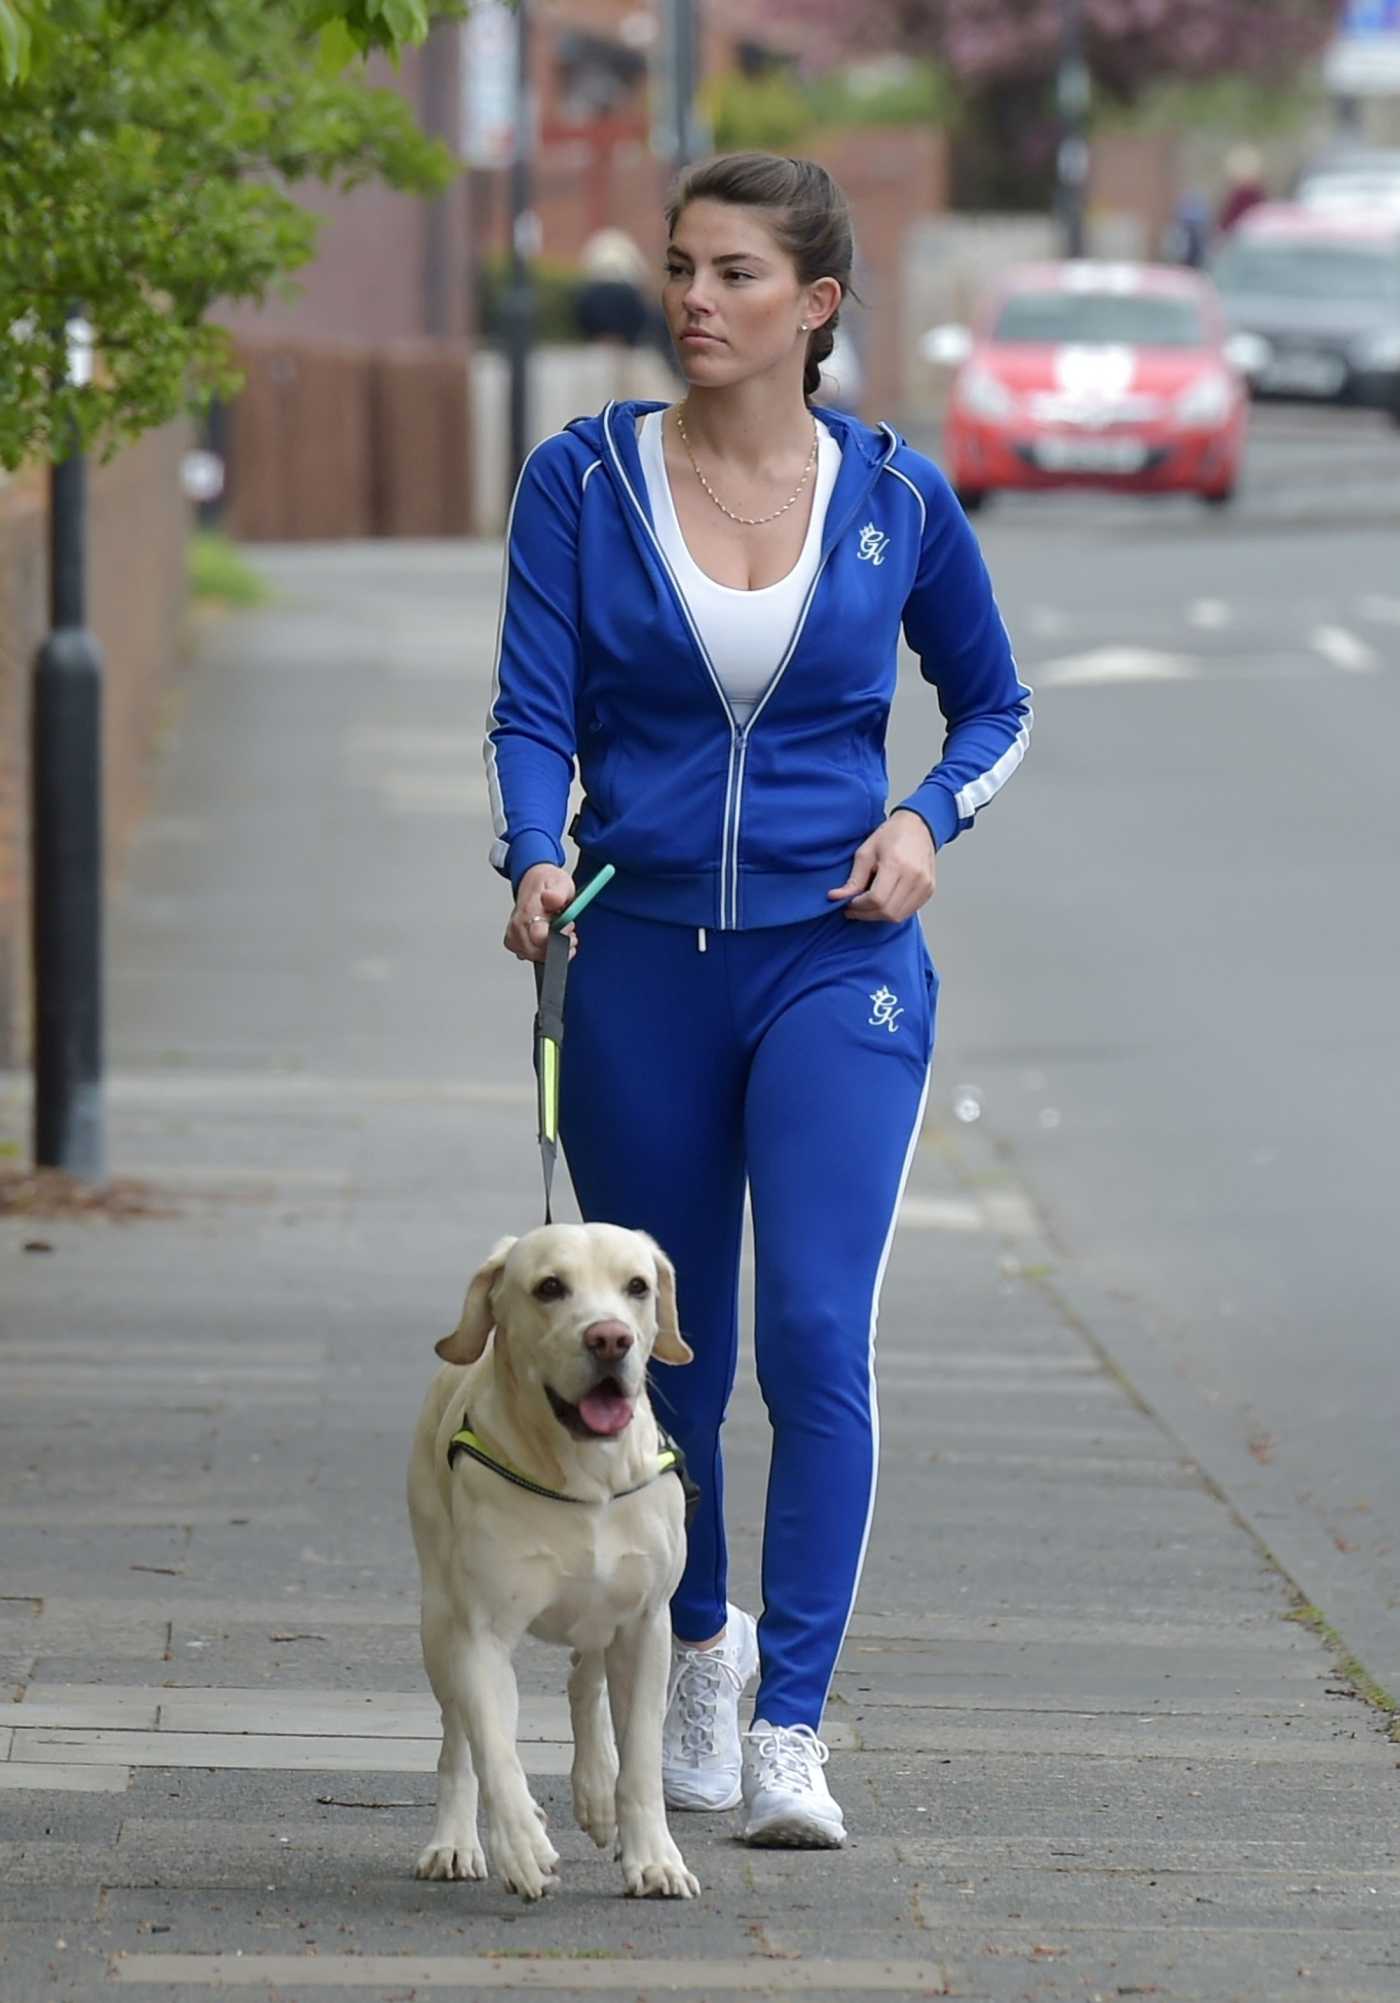 Rebecca Gormley in a Blue Tracksuit Walks Her Dog in Newcastle 05/14/2020